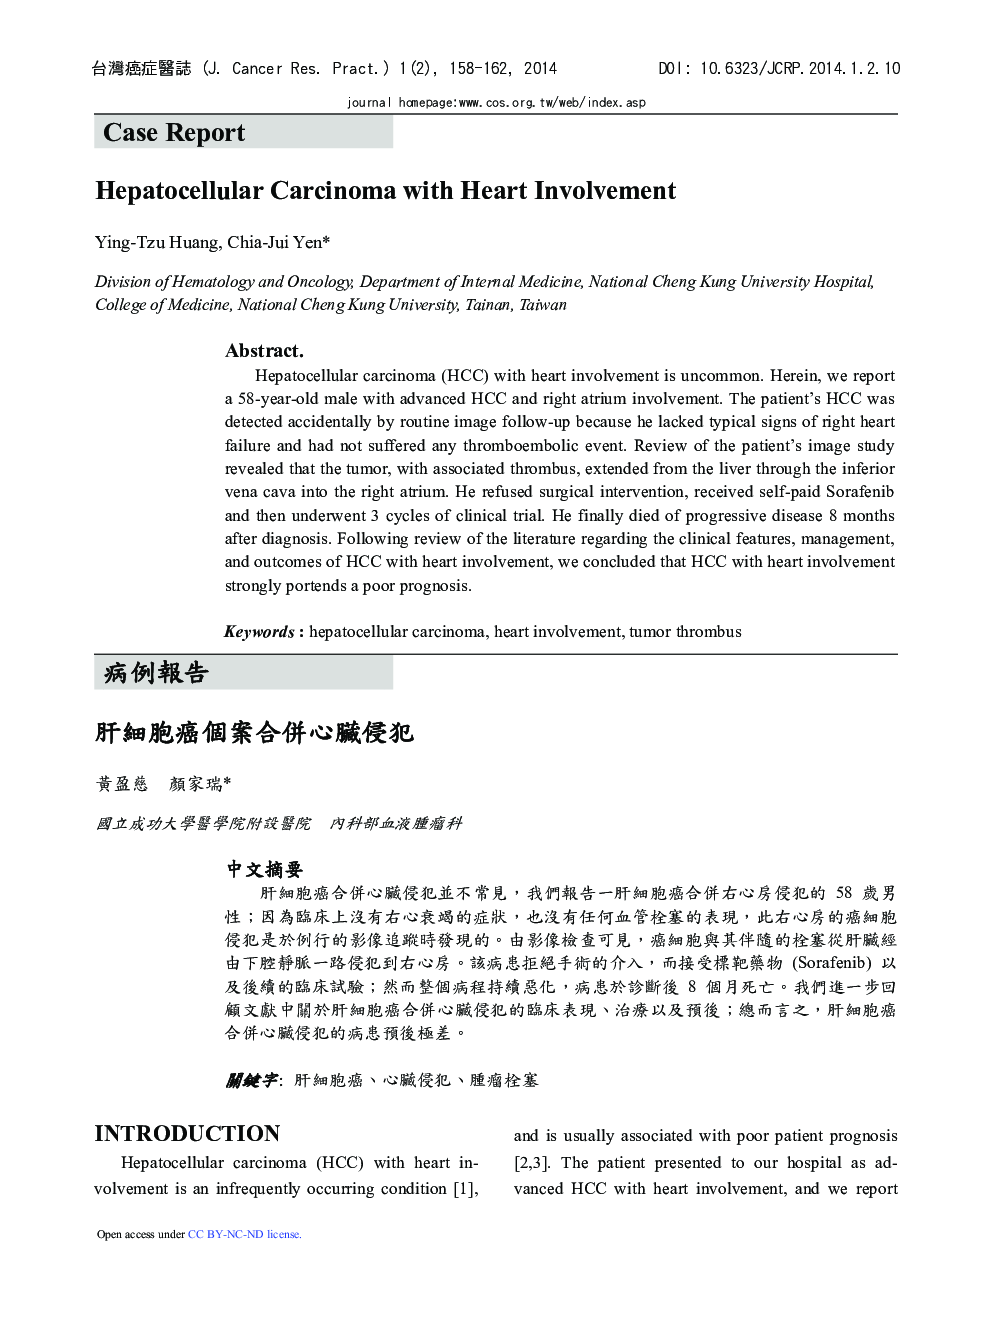 Hepatocellular Carcinoma with Heart Involvement